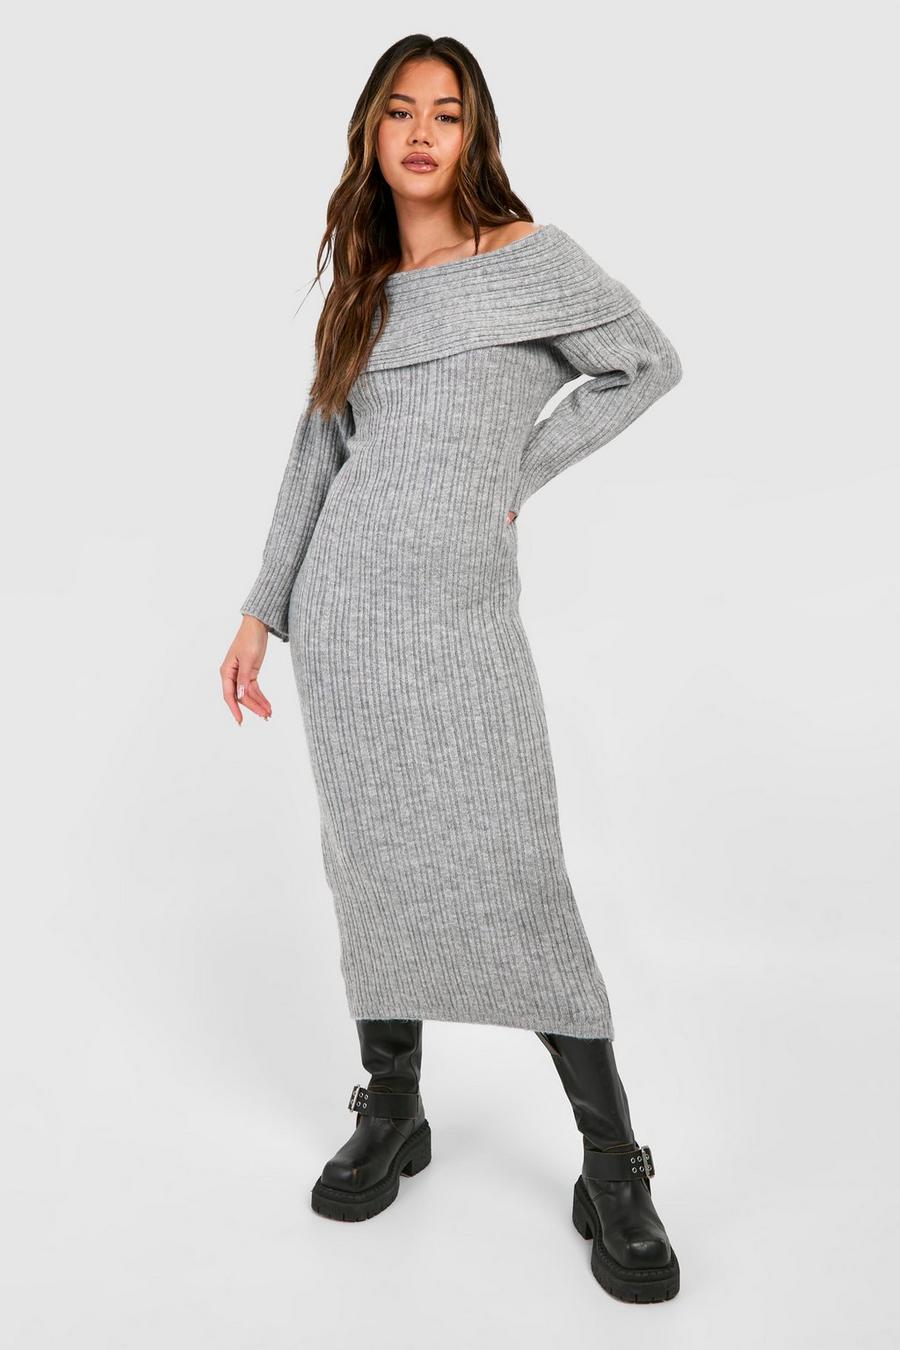 Grey Off The Shoulder Sweater Dress